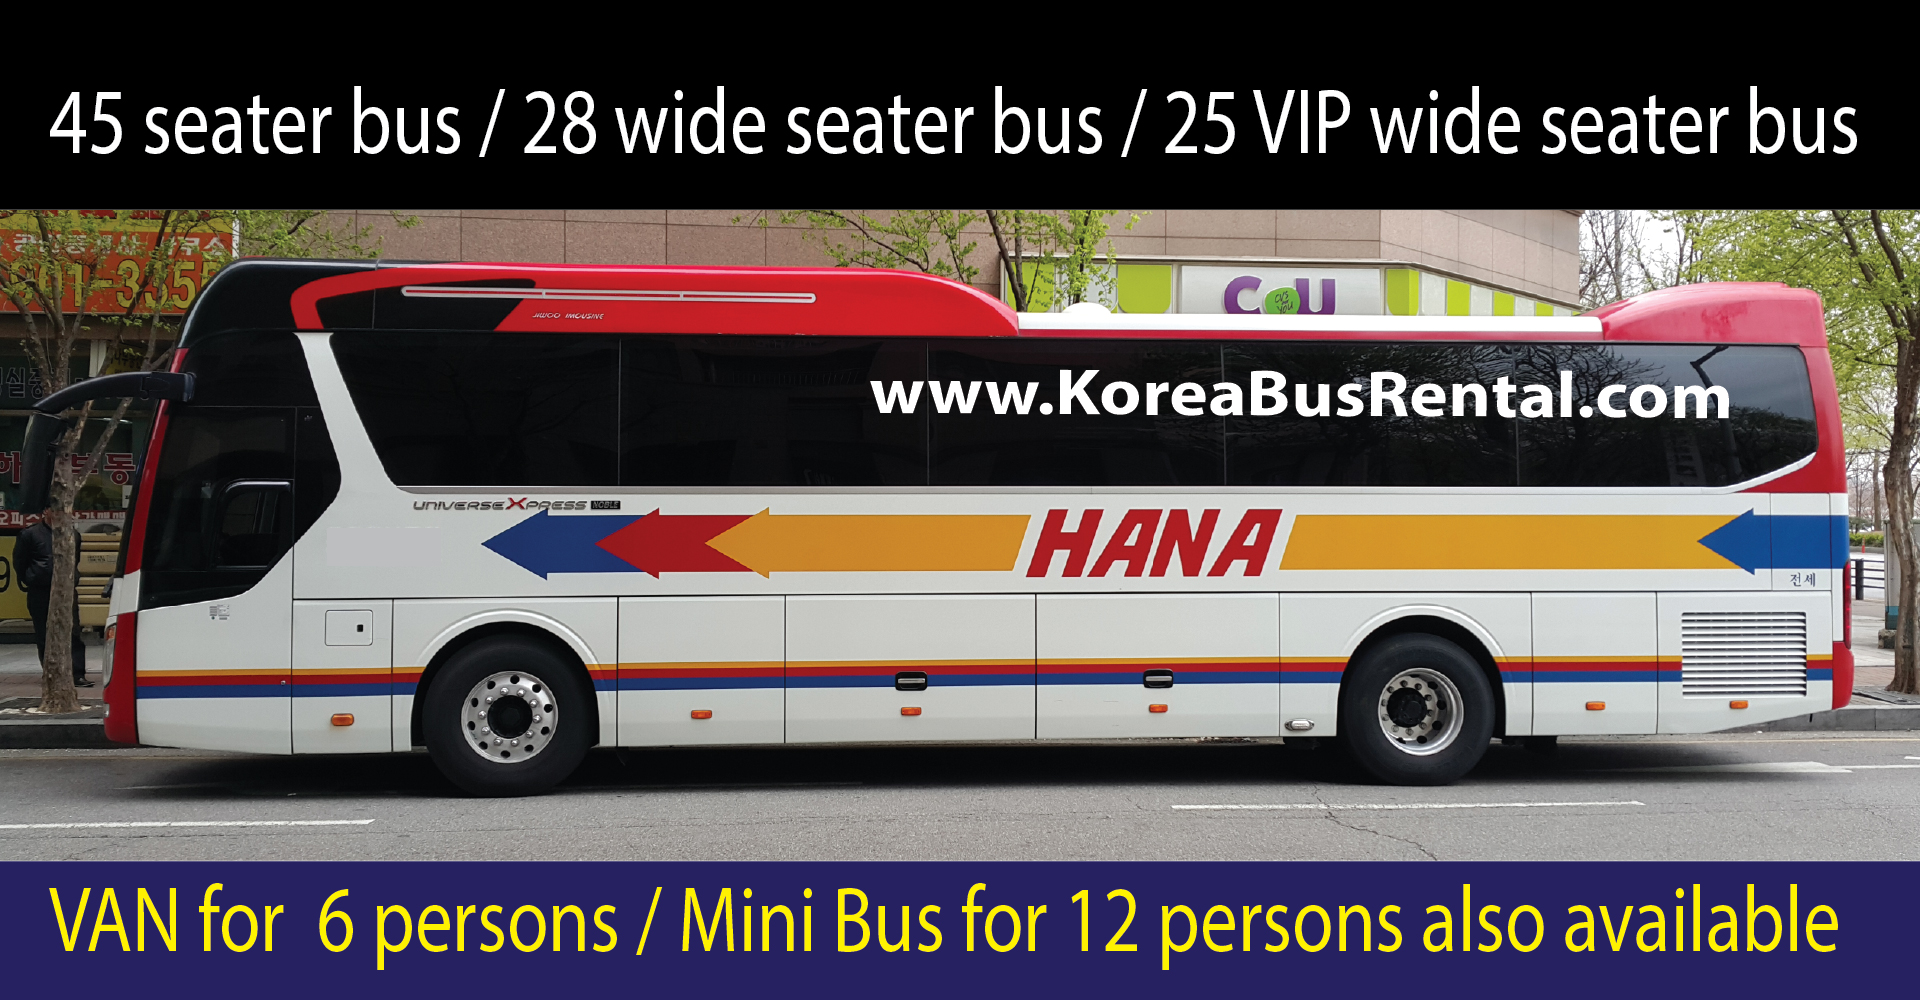 Korea bus rental